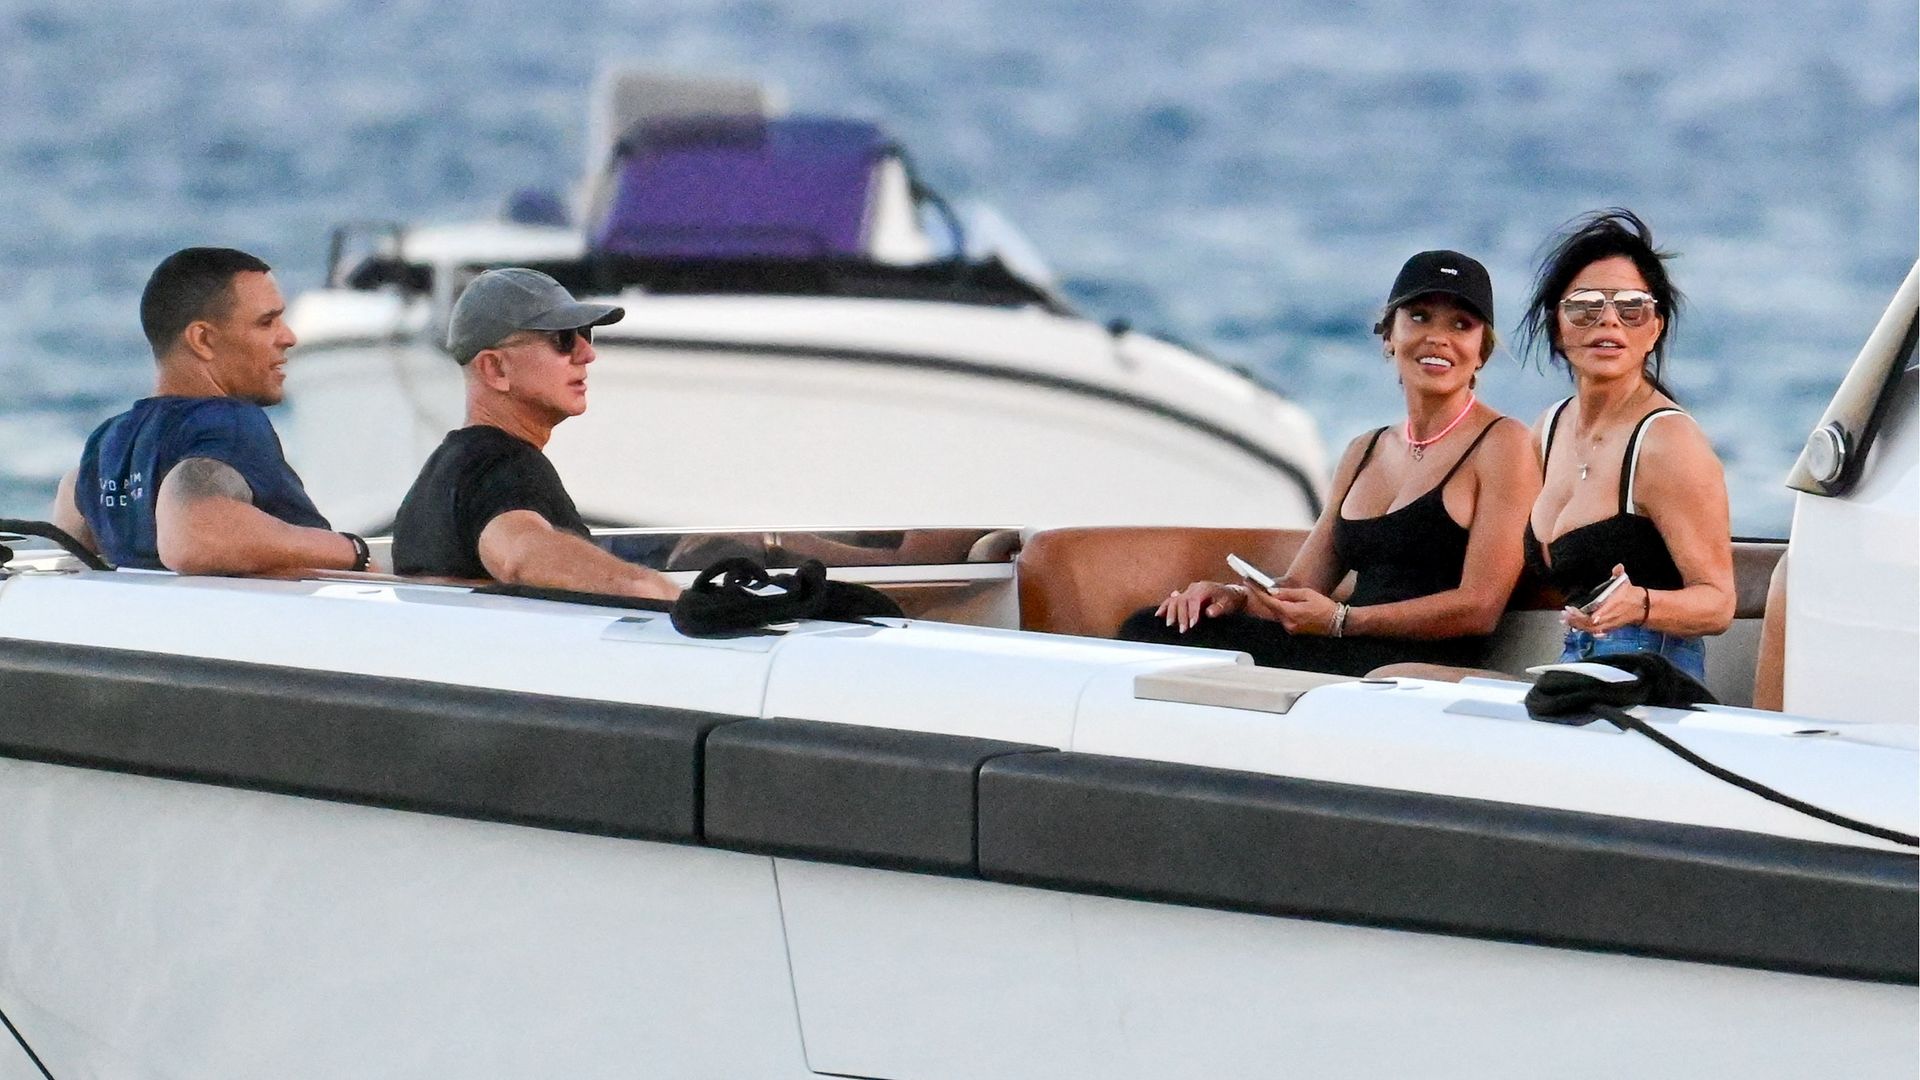 Lauren Sanchez enjoys a Greek vacation with billionaire fiancé Jeff Bezos - and ex-boyfriend Tony Gonzalez and his wife October.